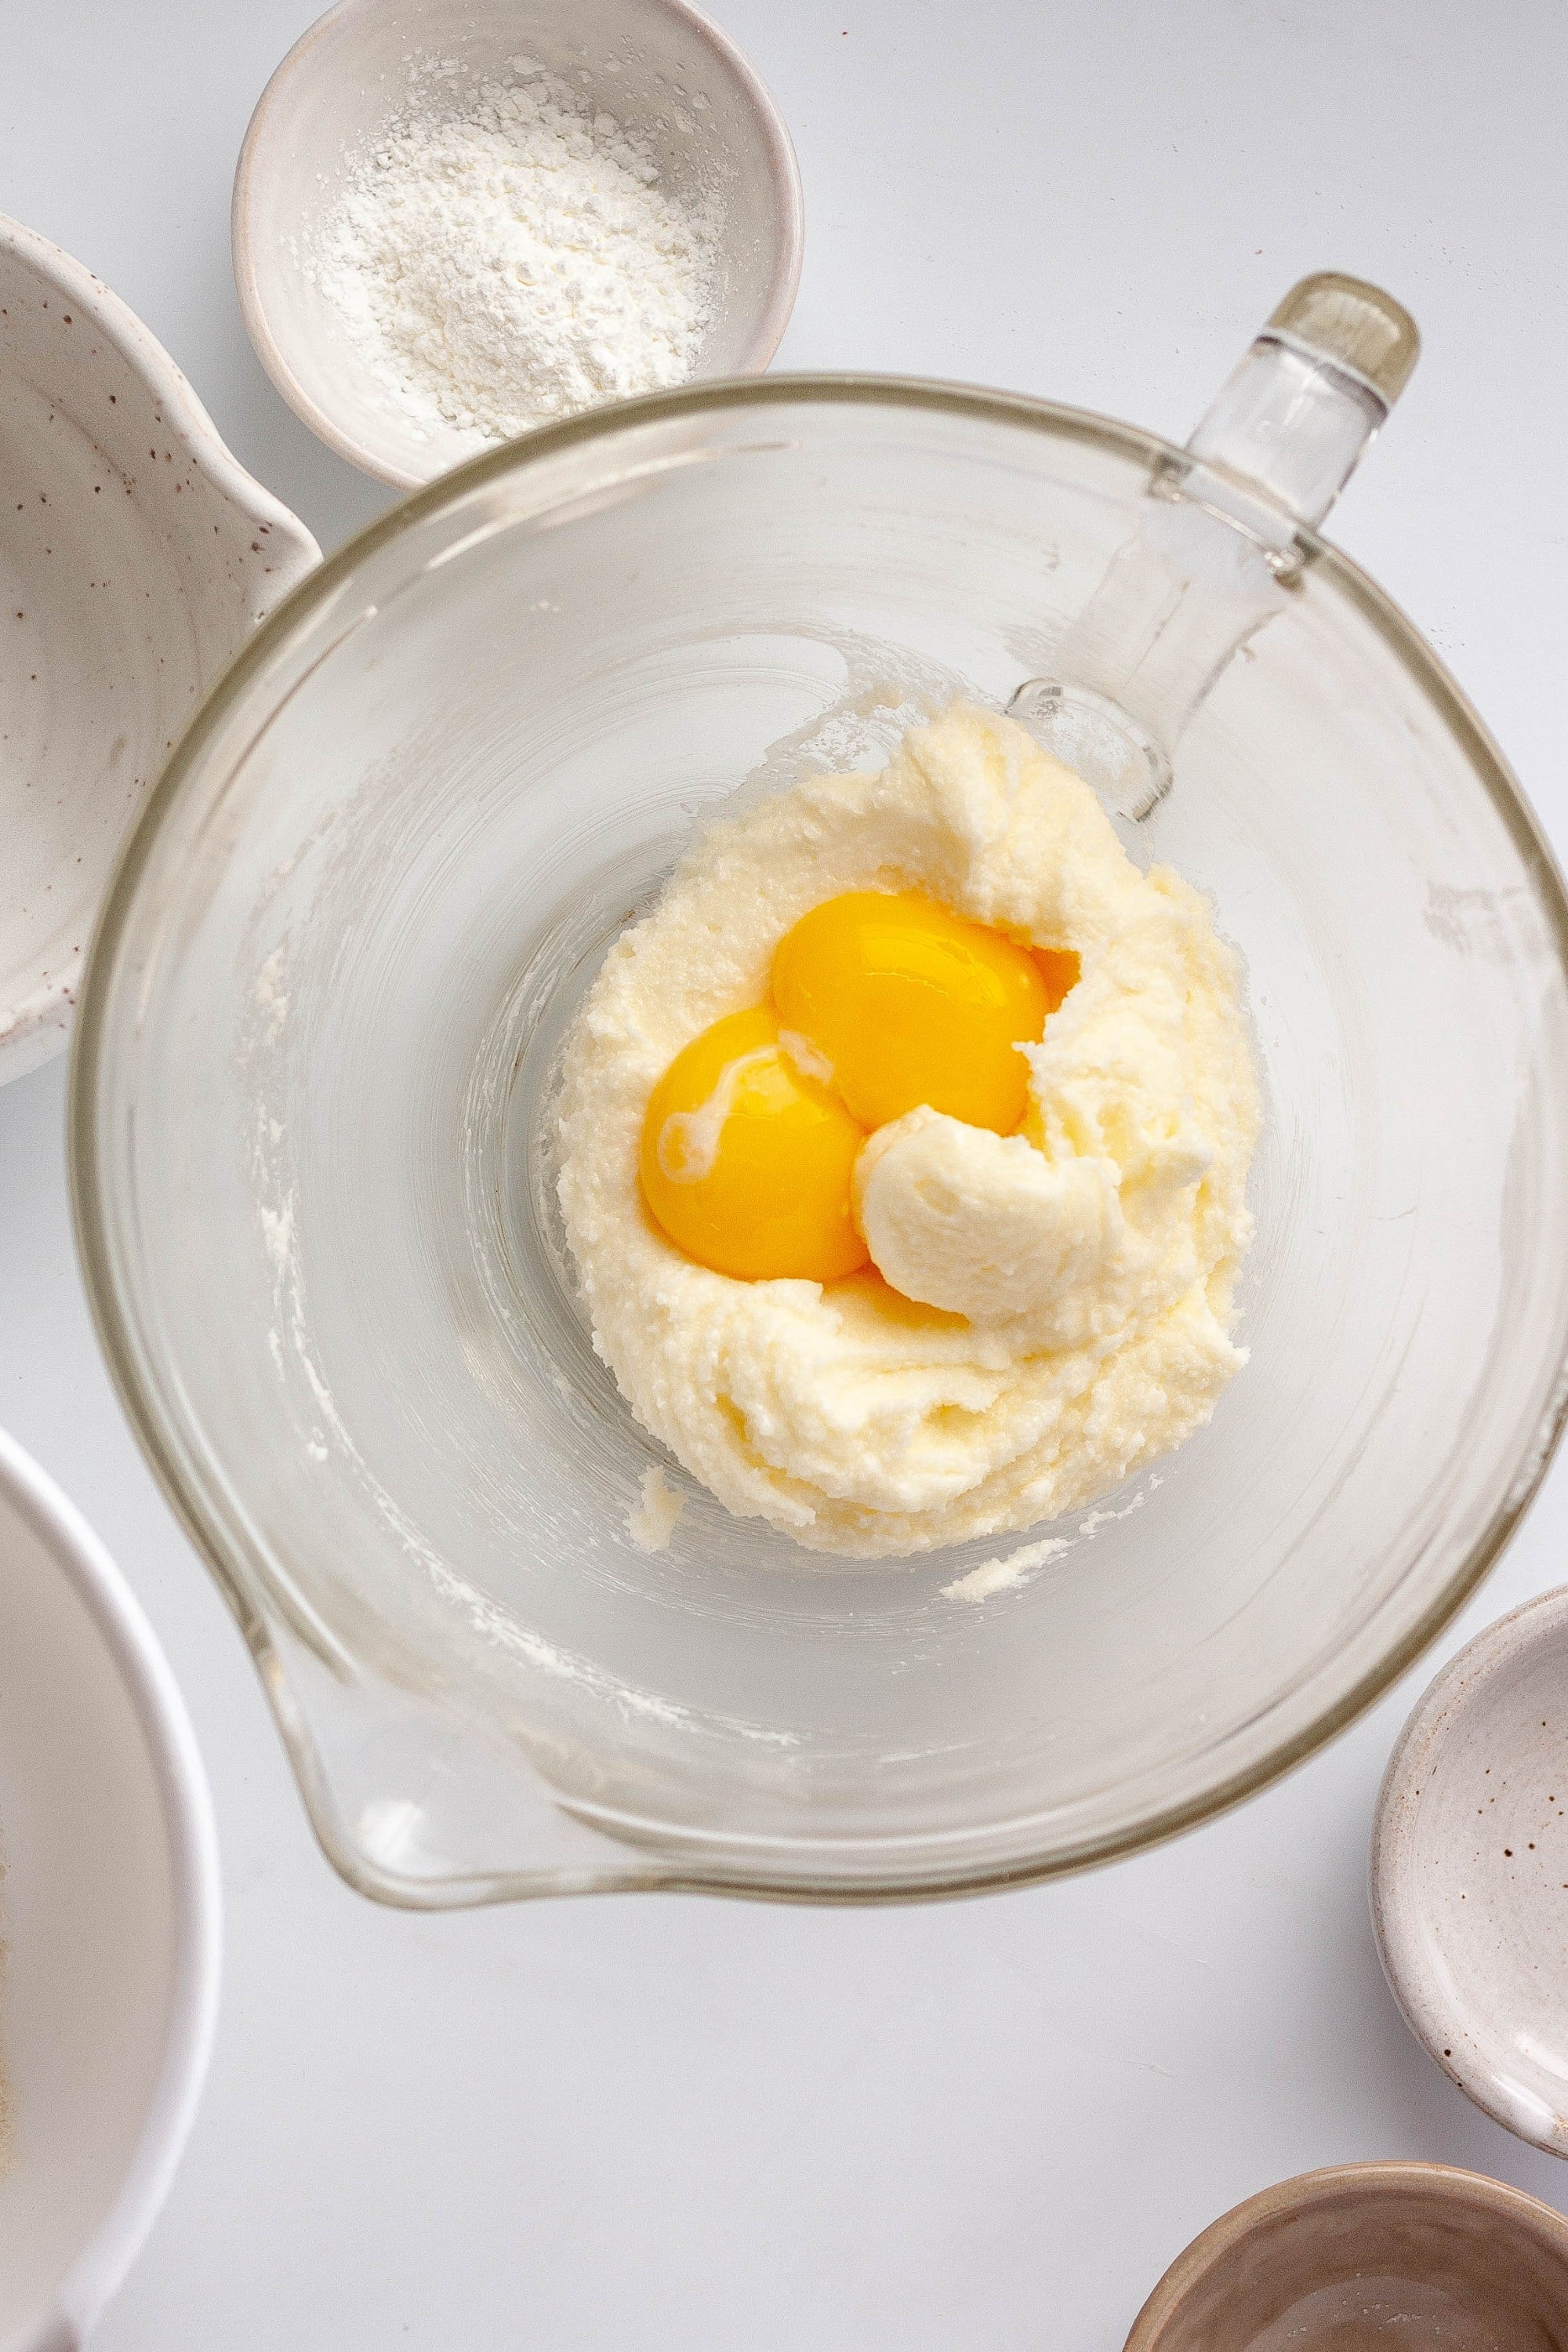 Egg yolk and vanilla added to sugar cookie mixture